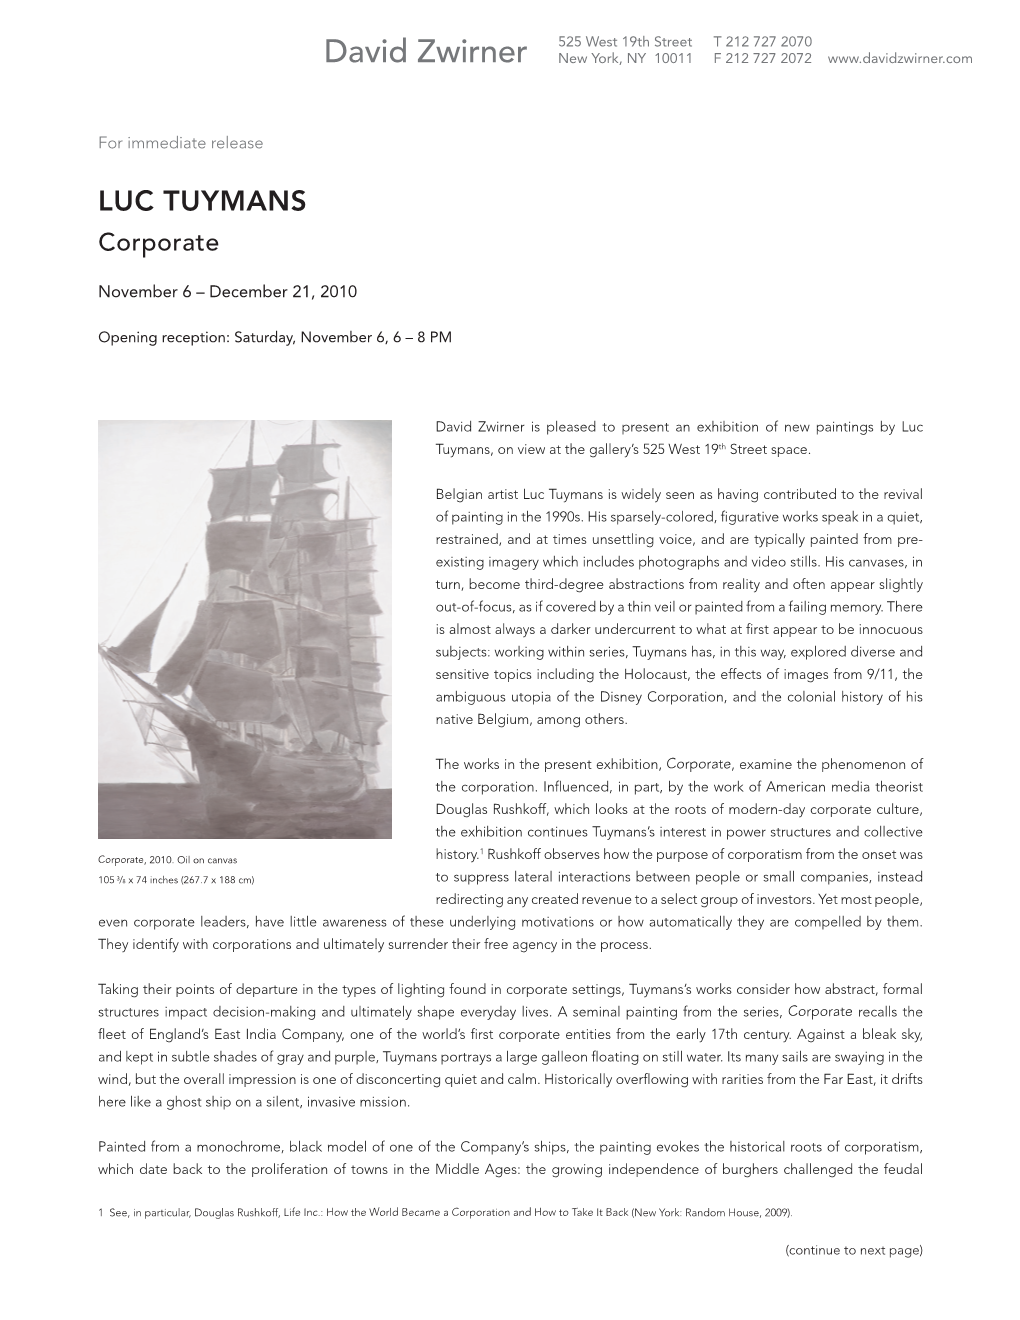 LUC TUYMANS Corporate